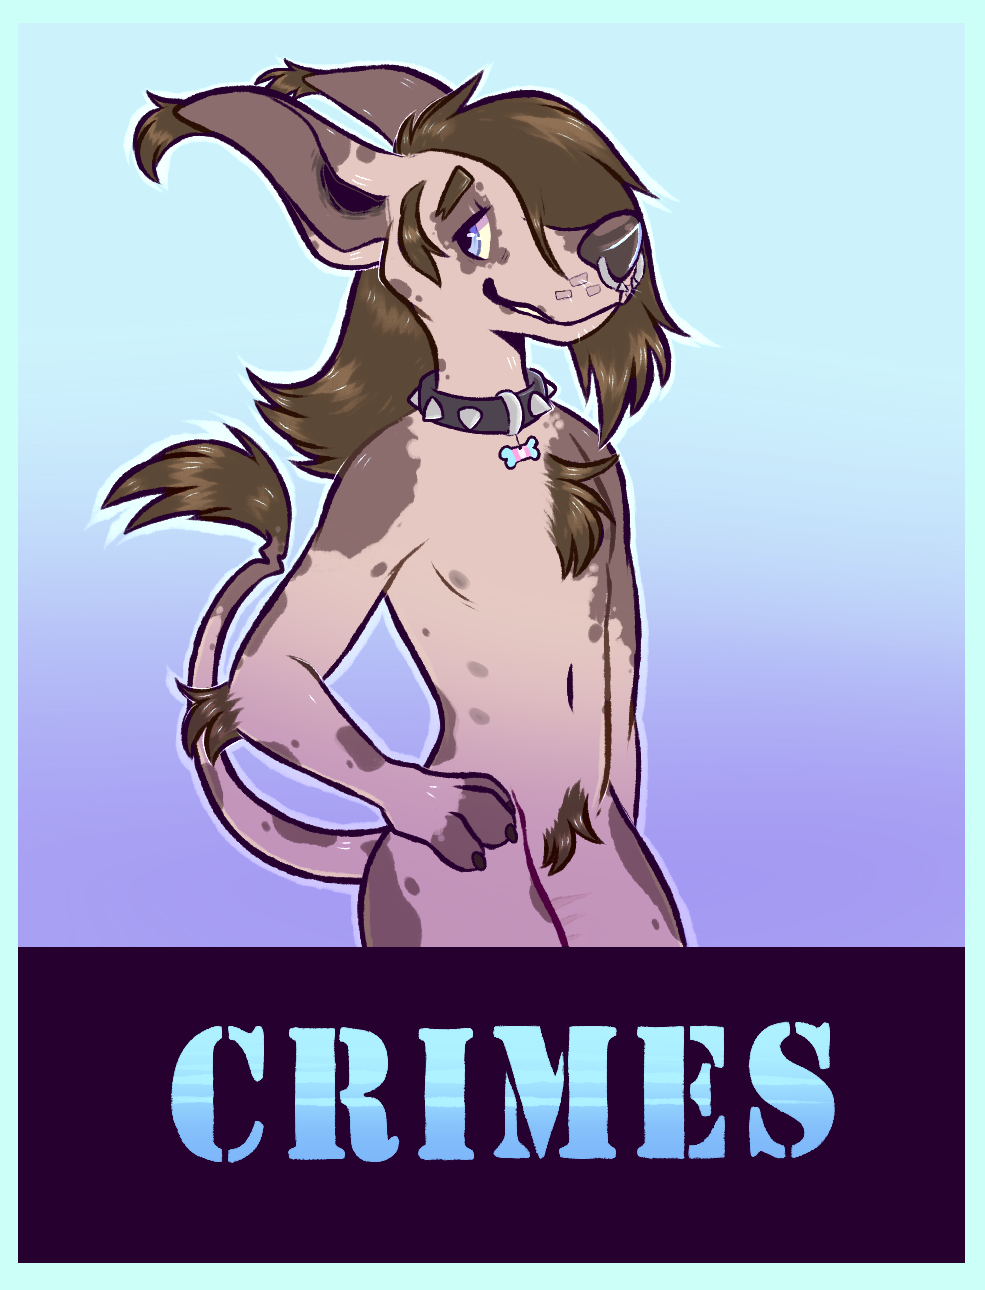 Crimes badge